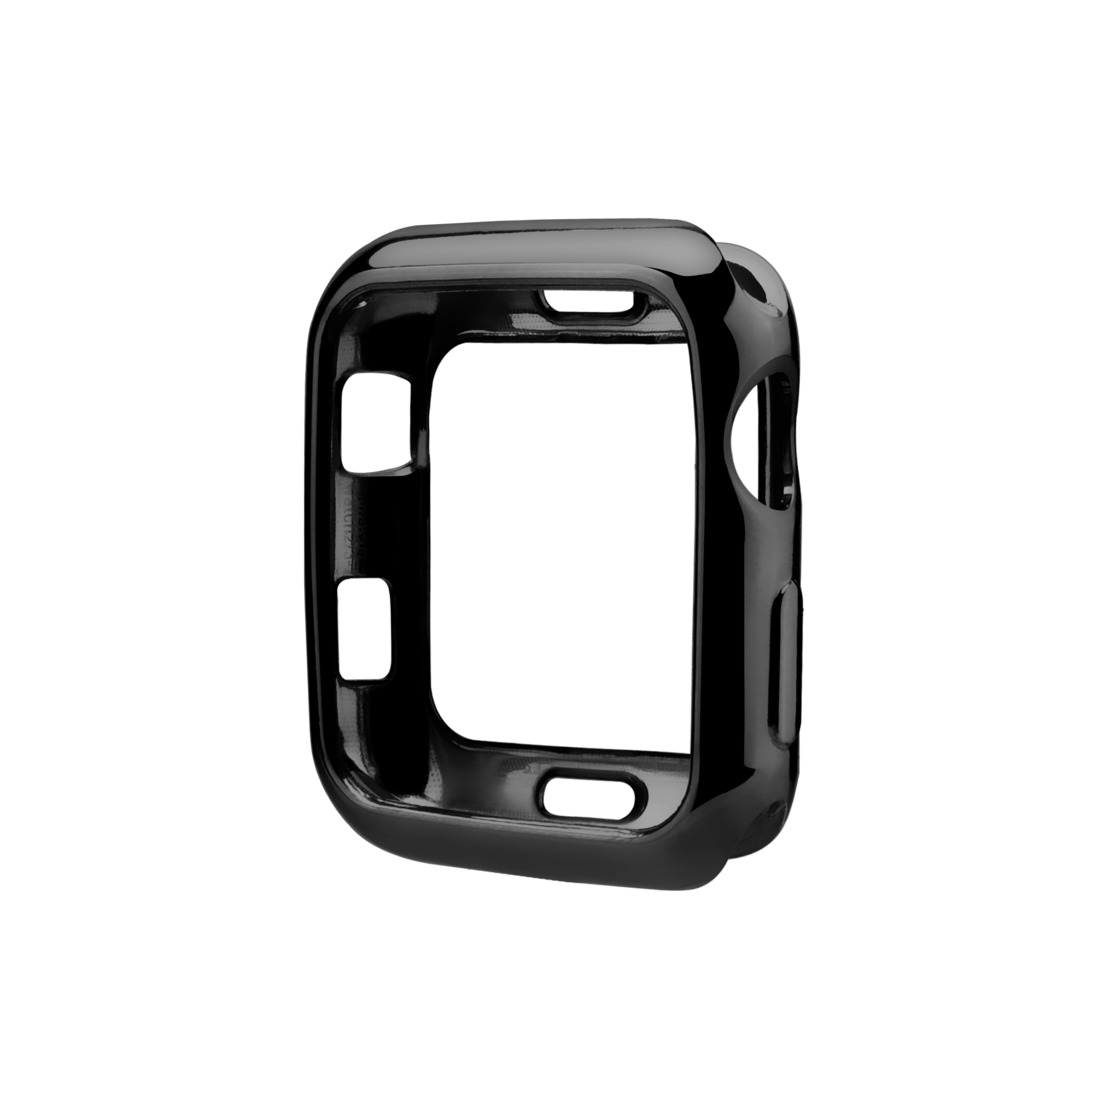 iPhone 7 Plus/7/6 Plus/6/5/5s/5c Case - Black Apple Watch Case (42mm/44mm)